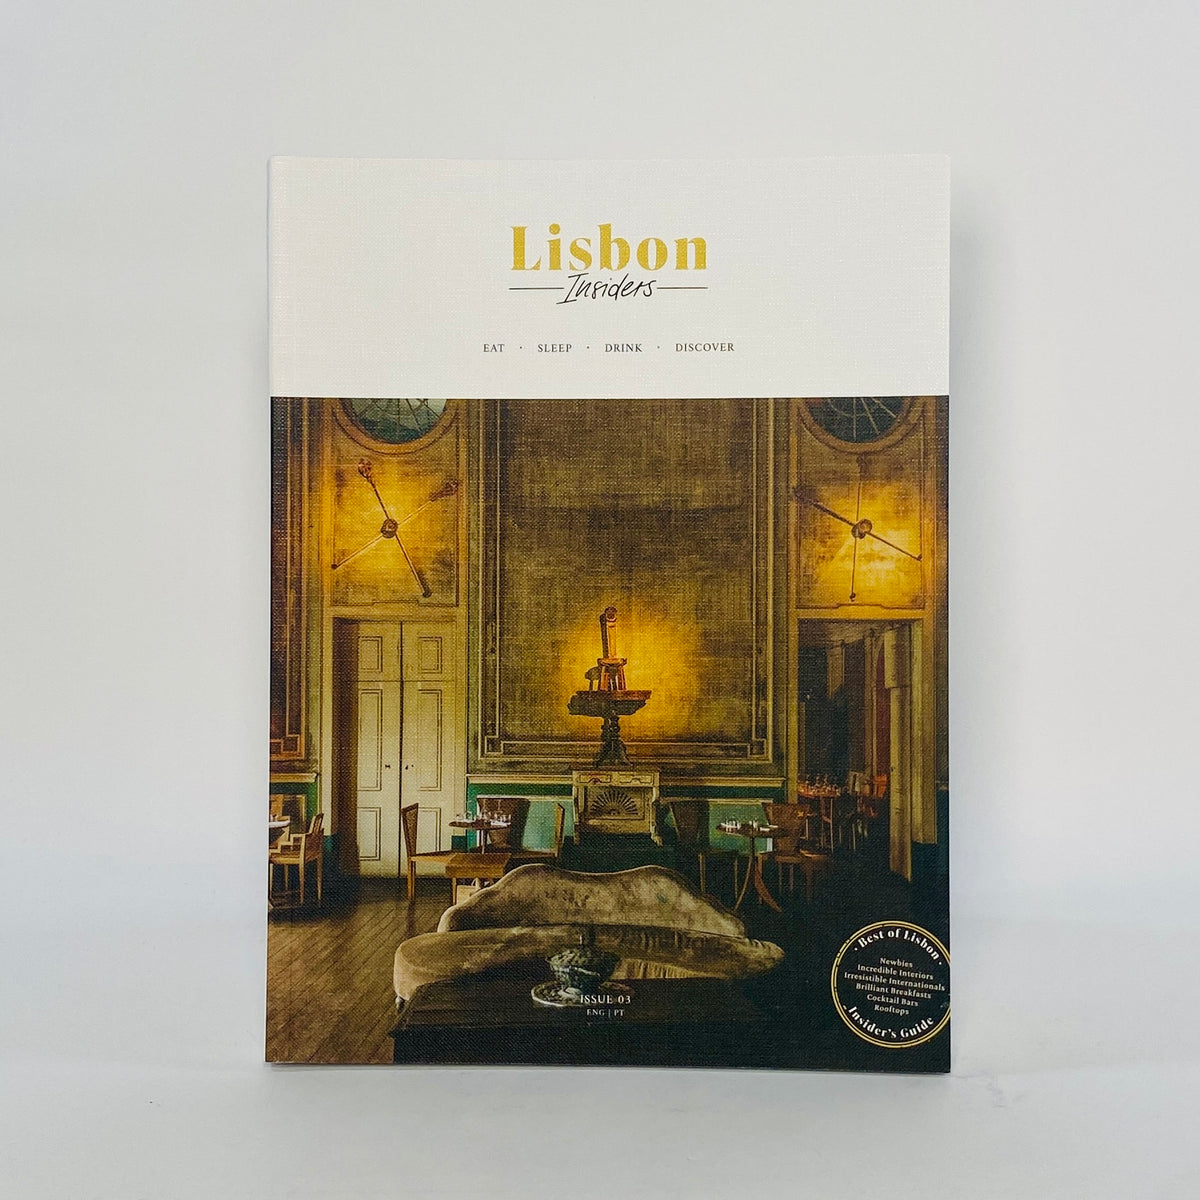 Insiders #3 - Lisbon